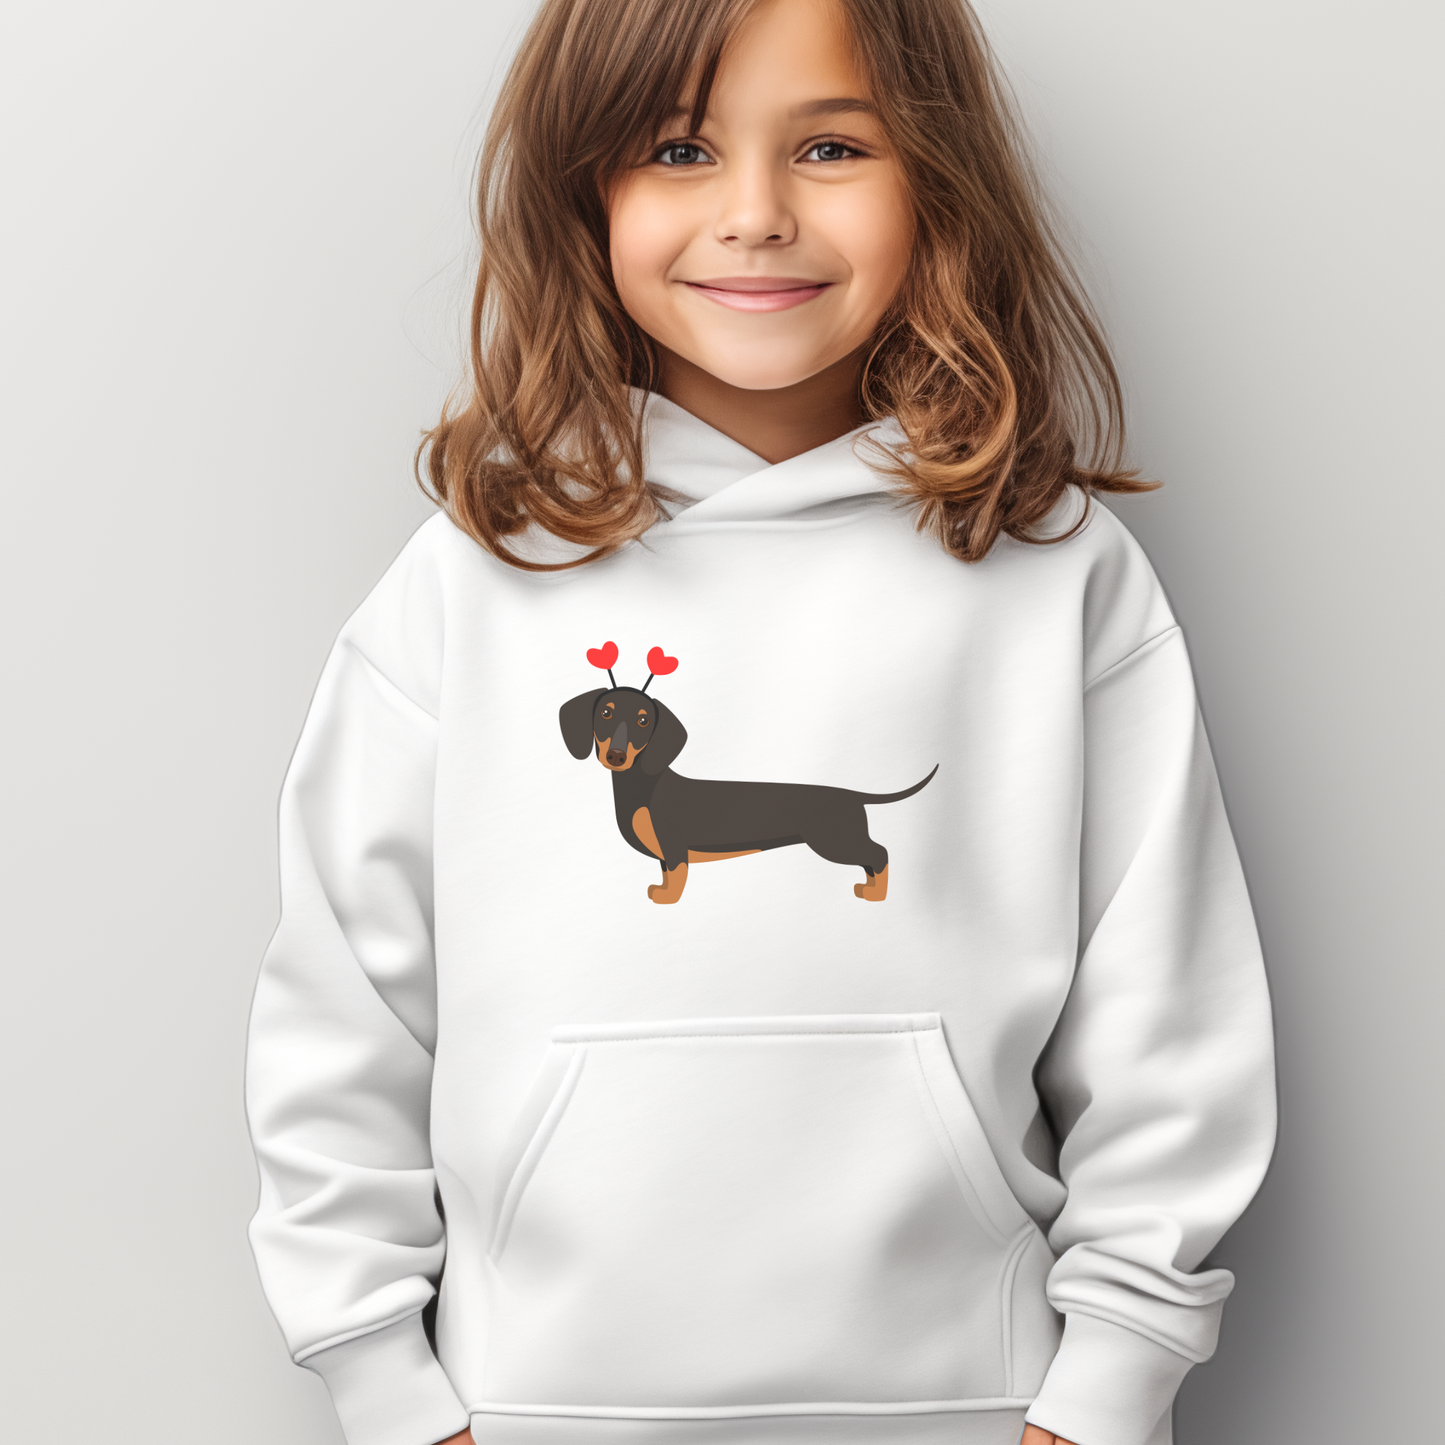 Girl wears a white hoodie with a printed cute black and tan dachshund dog.